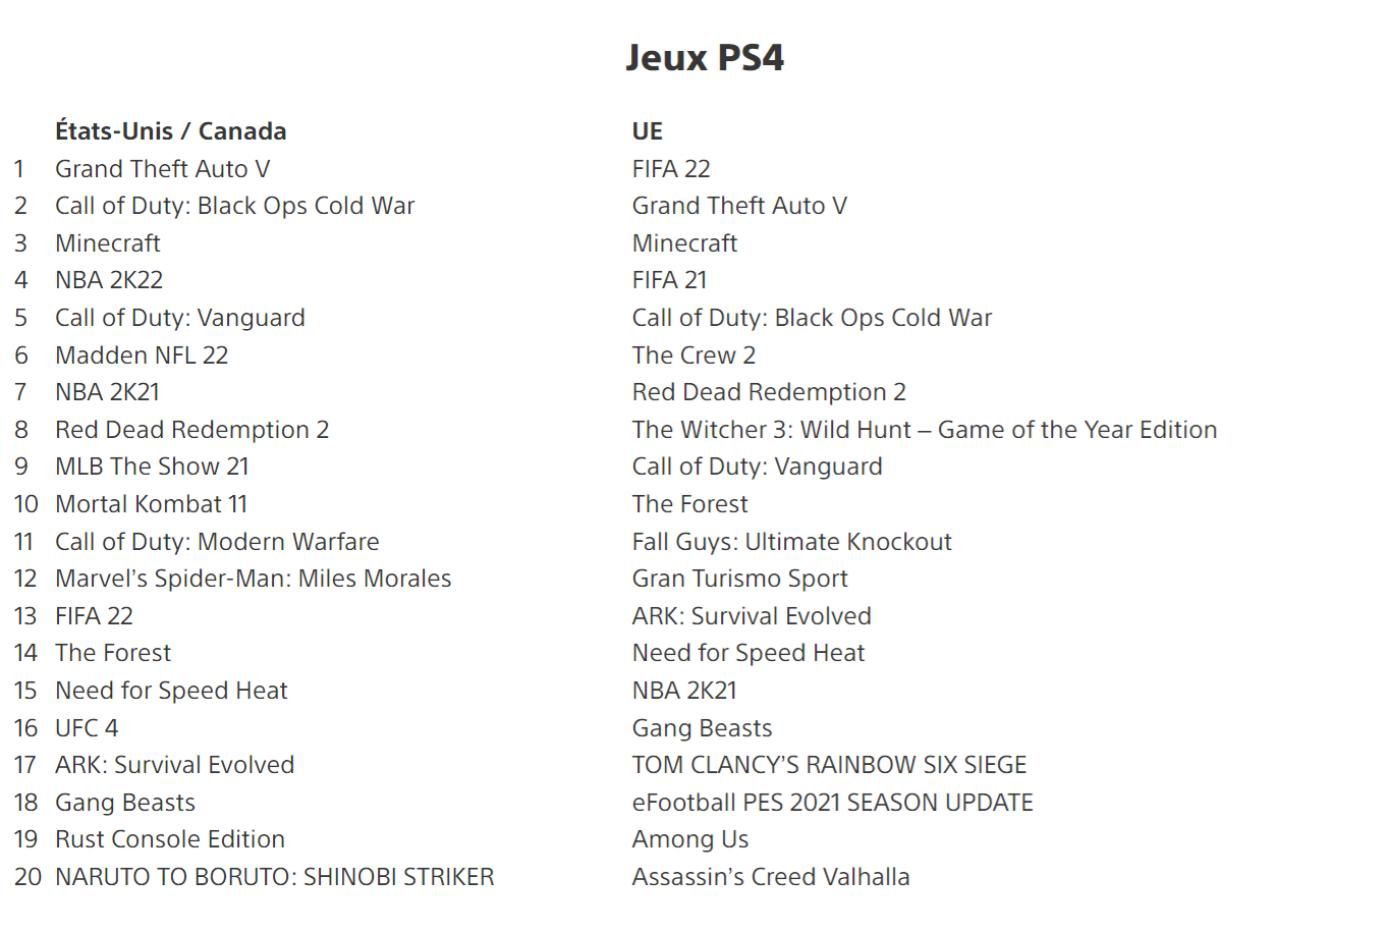 PS4 and PS5 playstation games